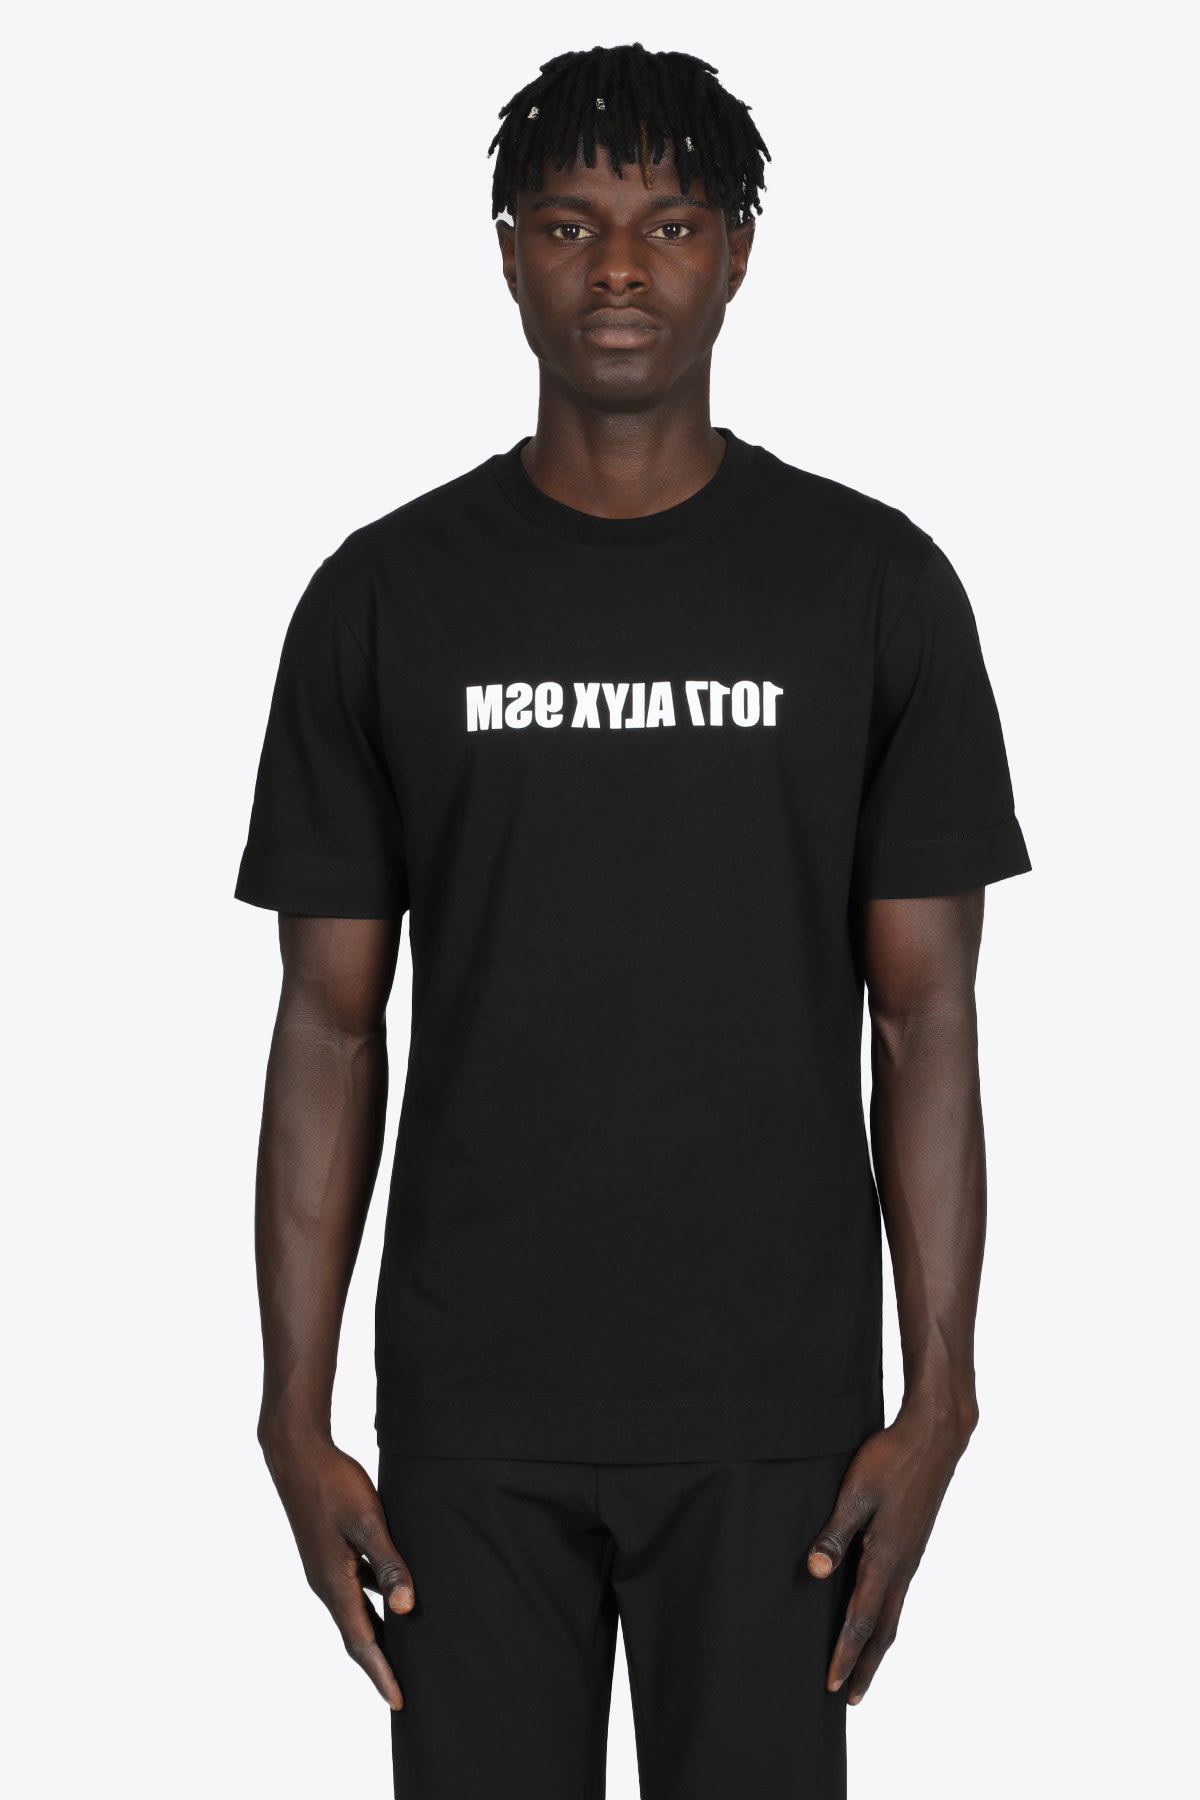 1017 ALYX 9SM Mirrored Logo S/s Tee Black cotton t-shirt with mirrored logo print